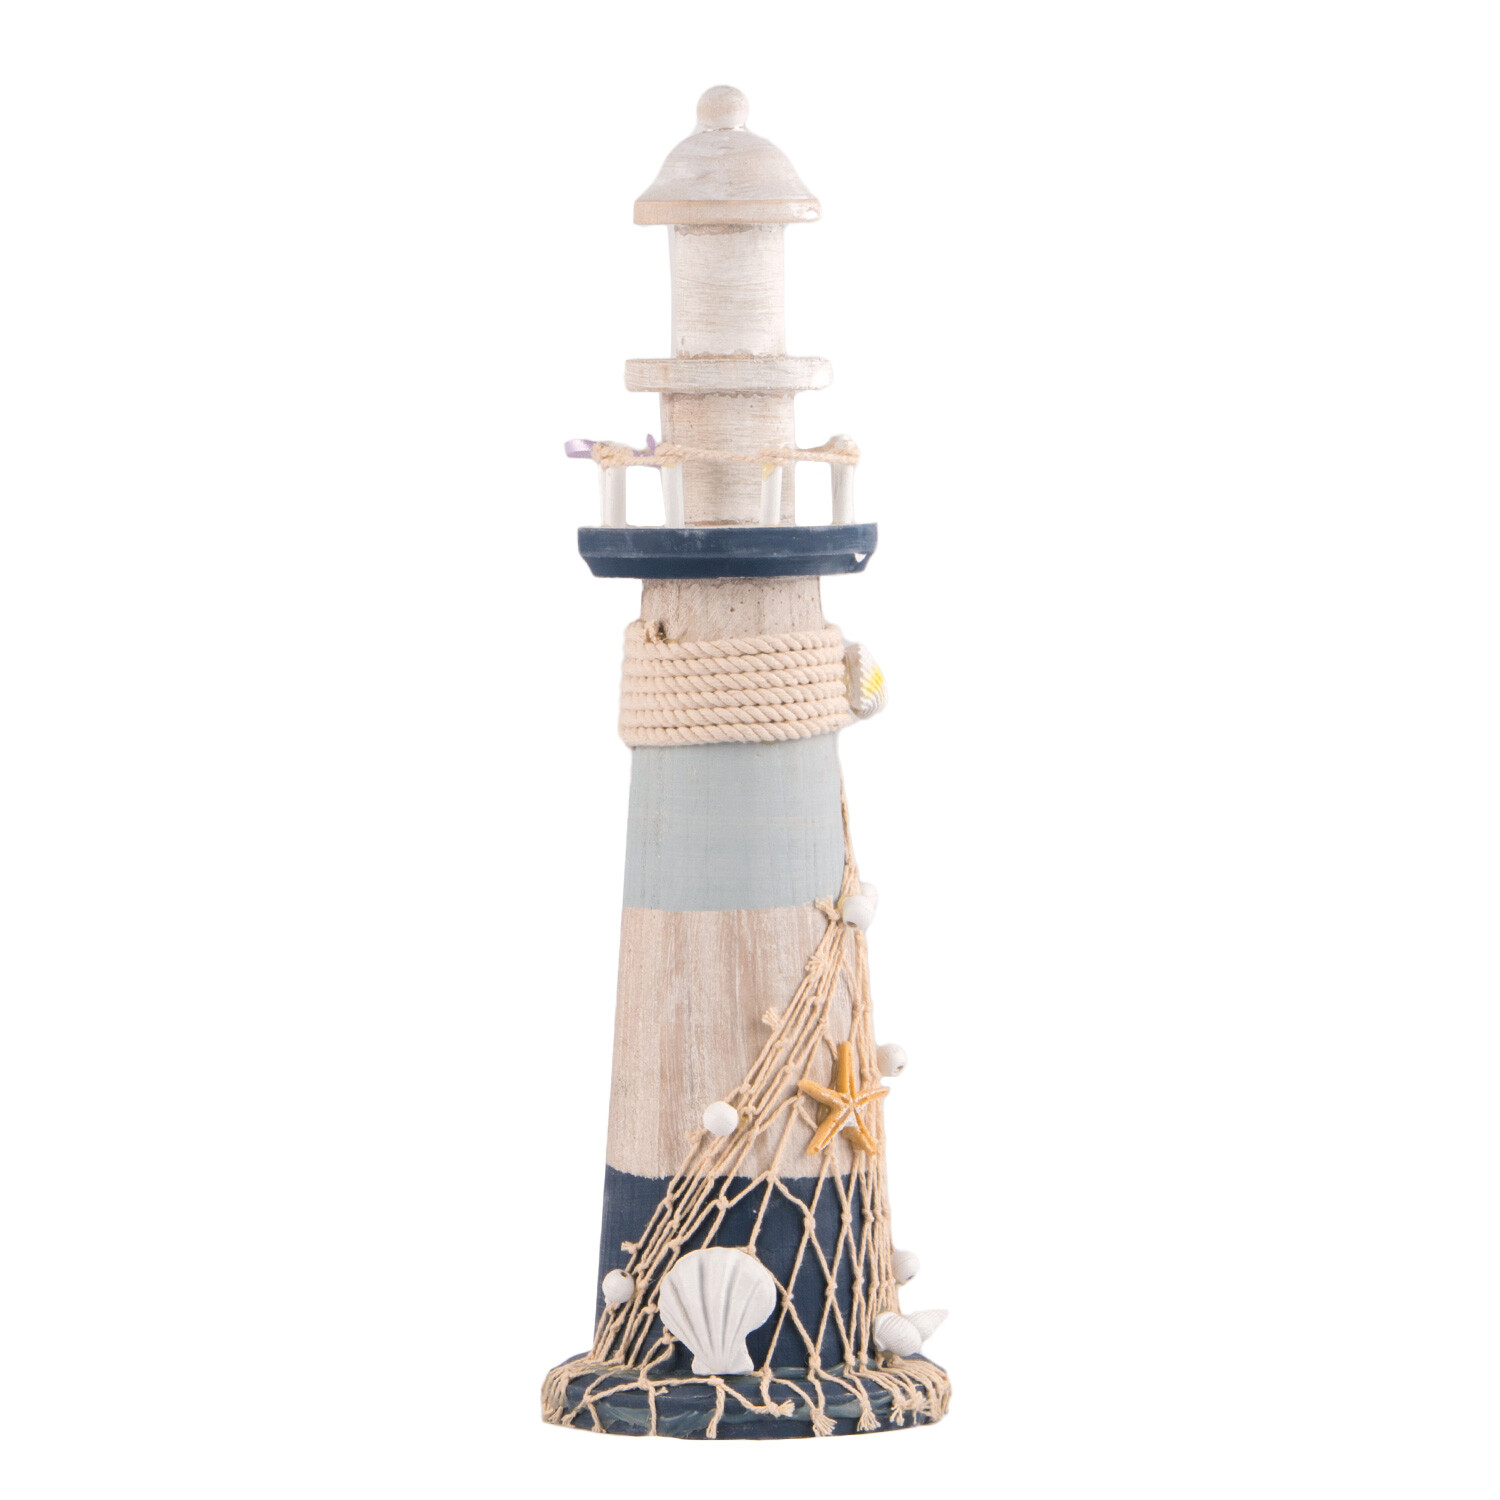 Blue and White Woodwash Lighthouse Decoration Ornament Image 2